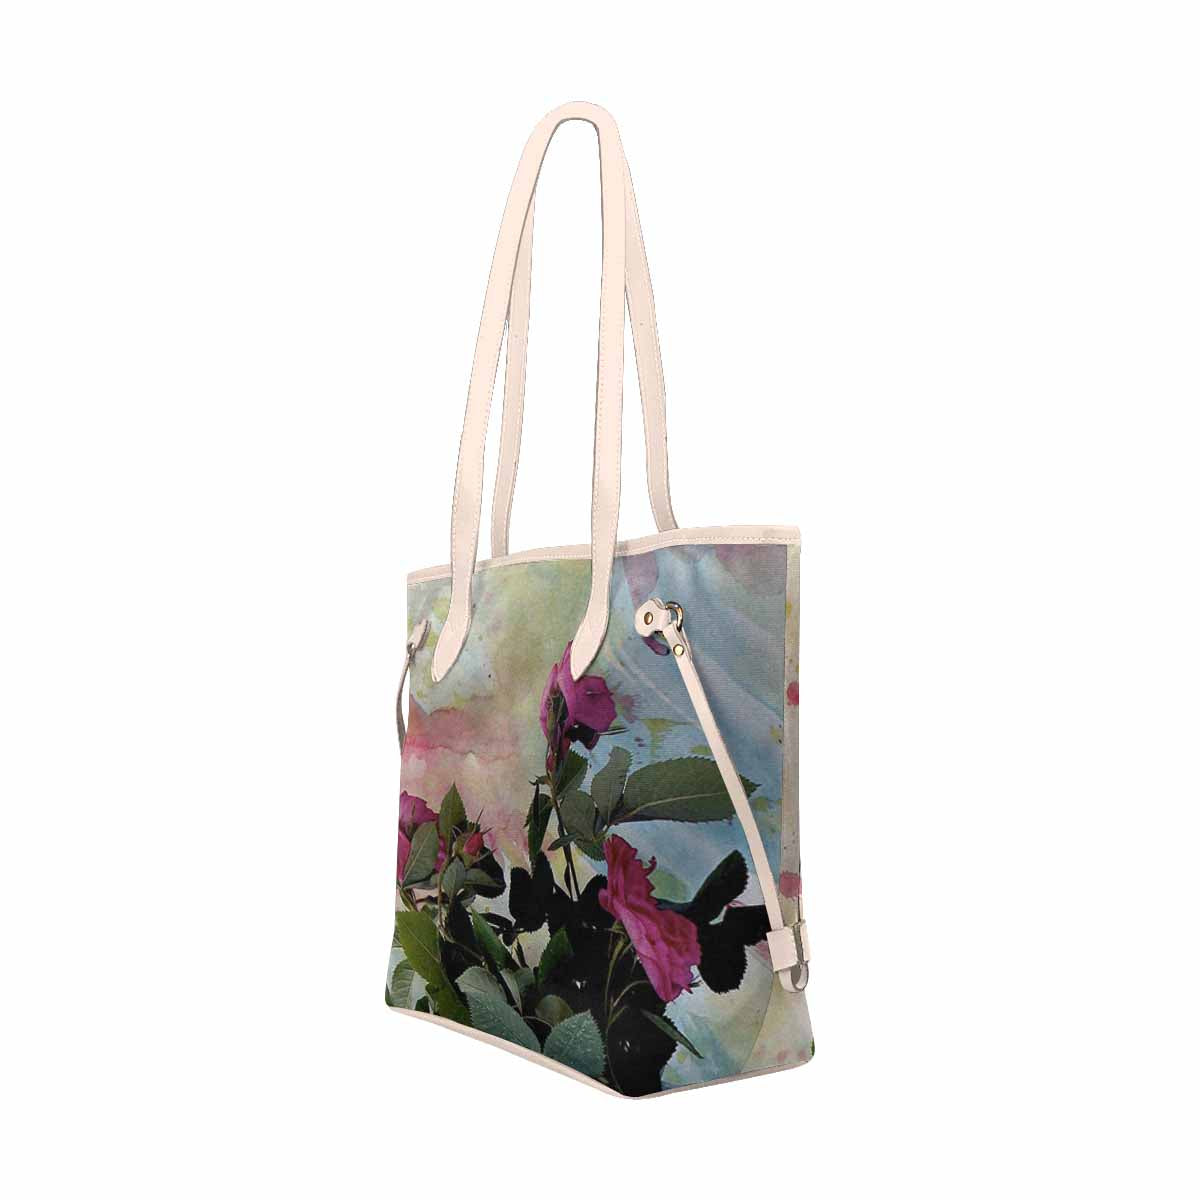 Vintage Floral Handbag, Classic Handbag, Mod 1695361 Design 21, BEIGE/TAN TRIM